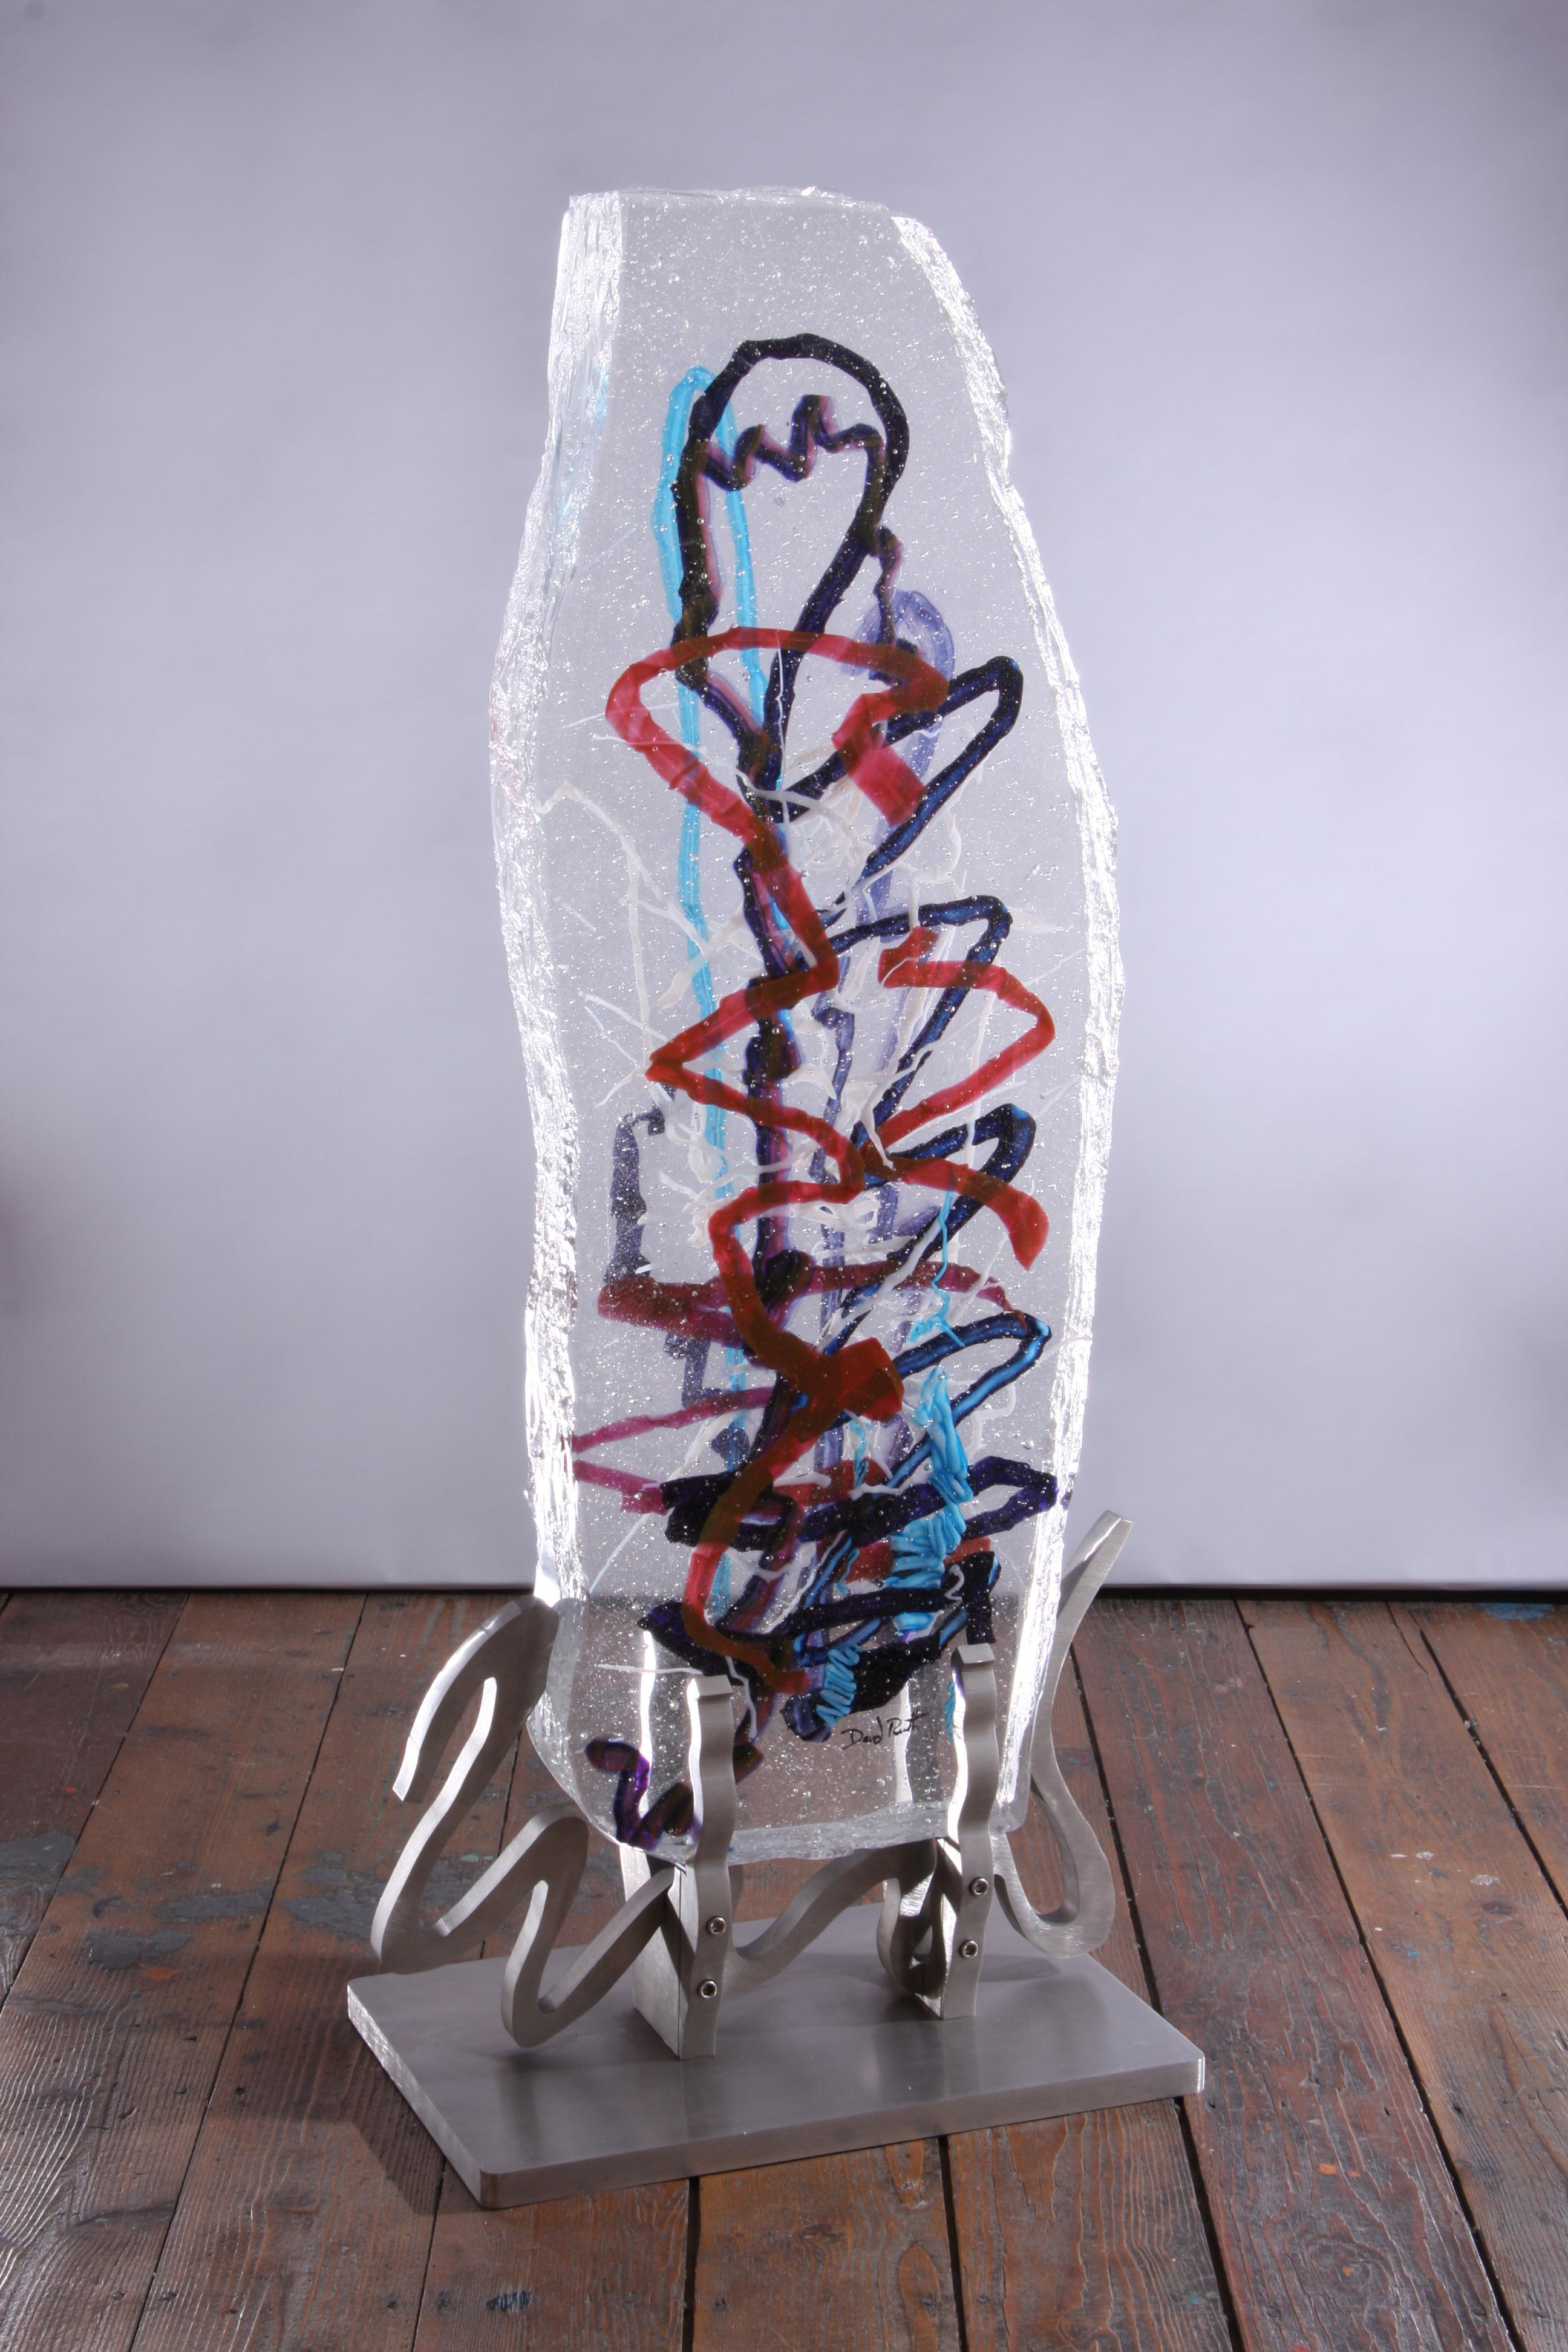 Abstract Cast Glass Sculpture, 'Mandul', 2008 by David Ruth